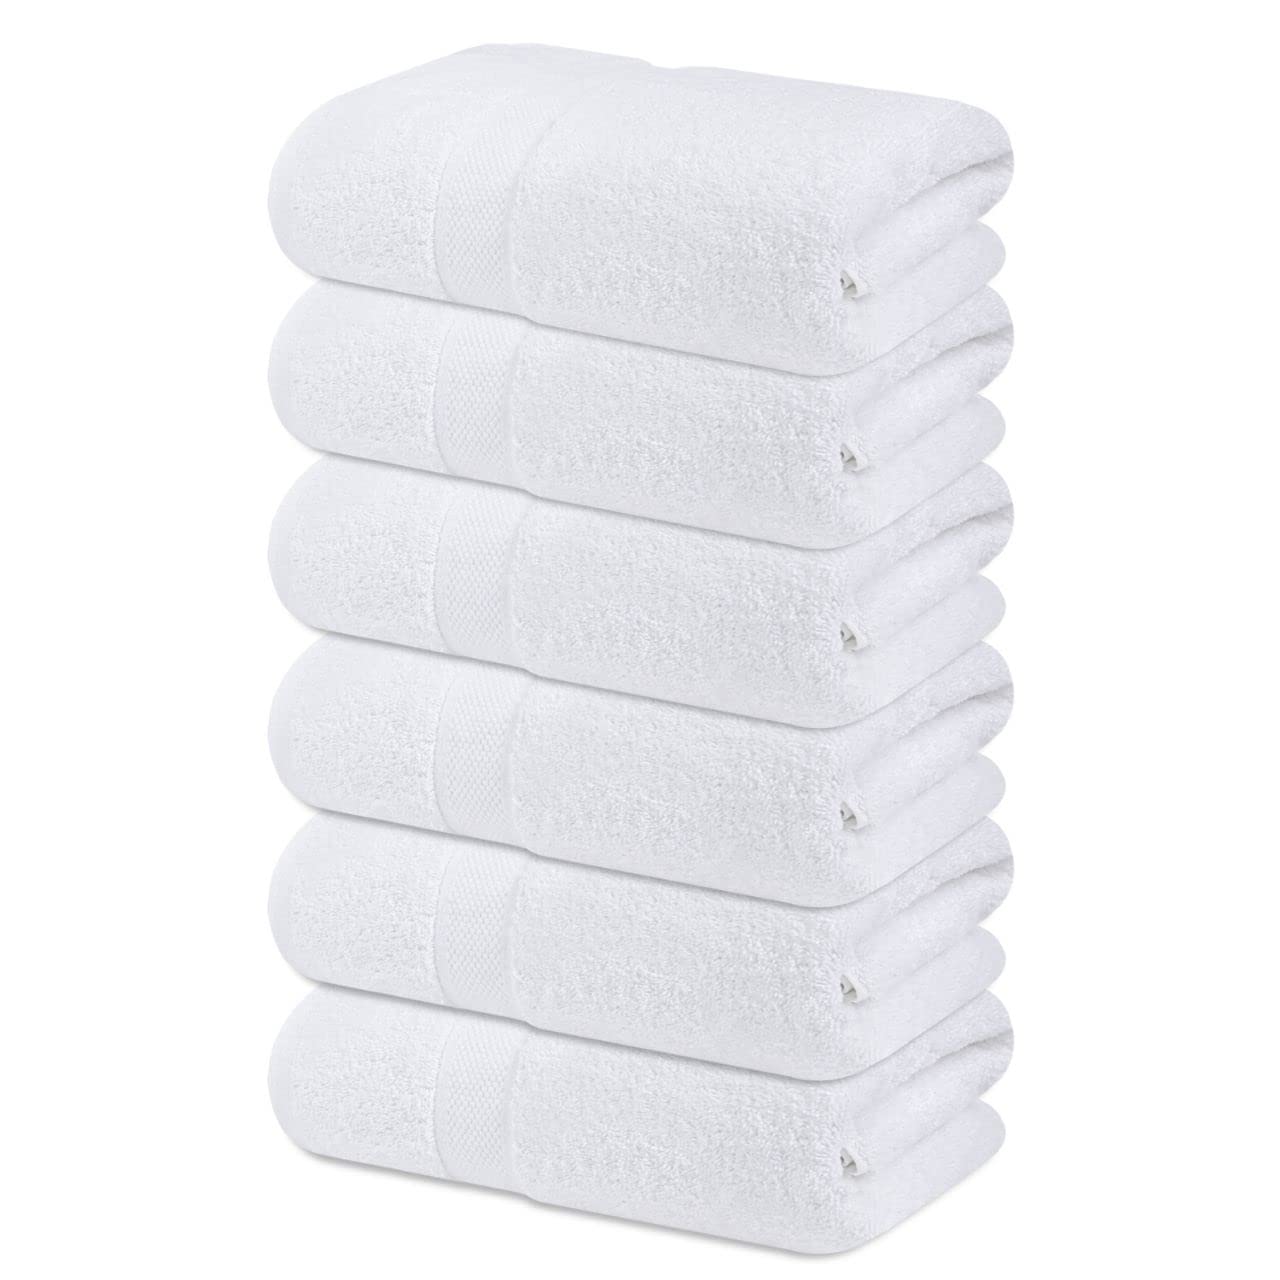 Infinitee Xclusives Premium White Hand Towels 6 Pack, 16x28 Inches